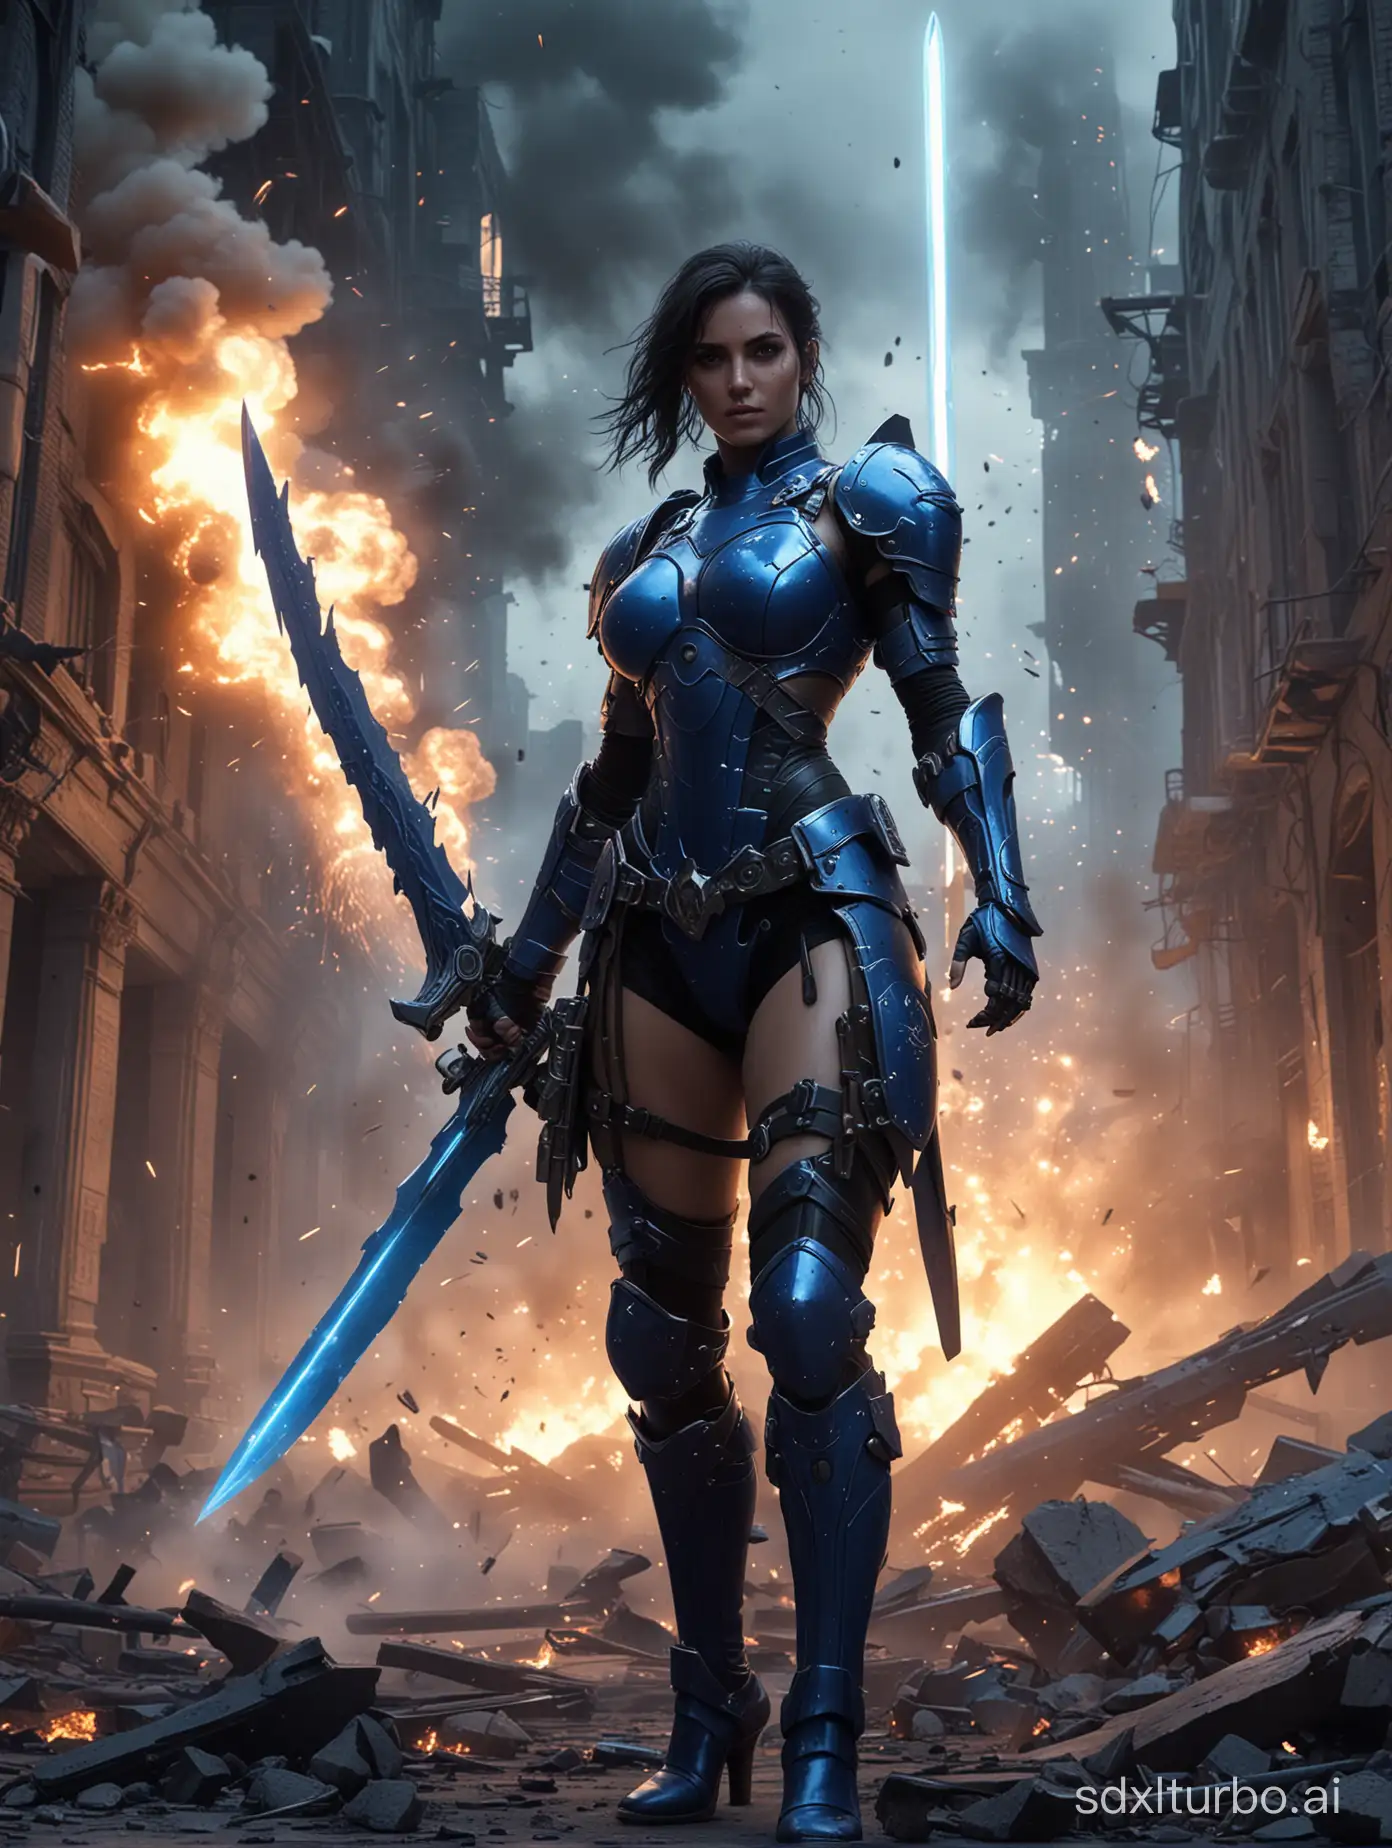 Futuristic-Warrior-Woman-in-Deadly-Blue-Armor-Amidst-Nighttime-Destruction